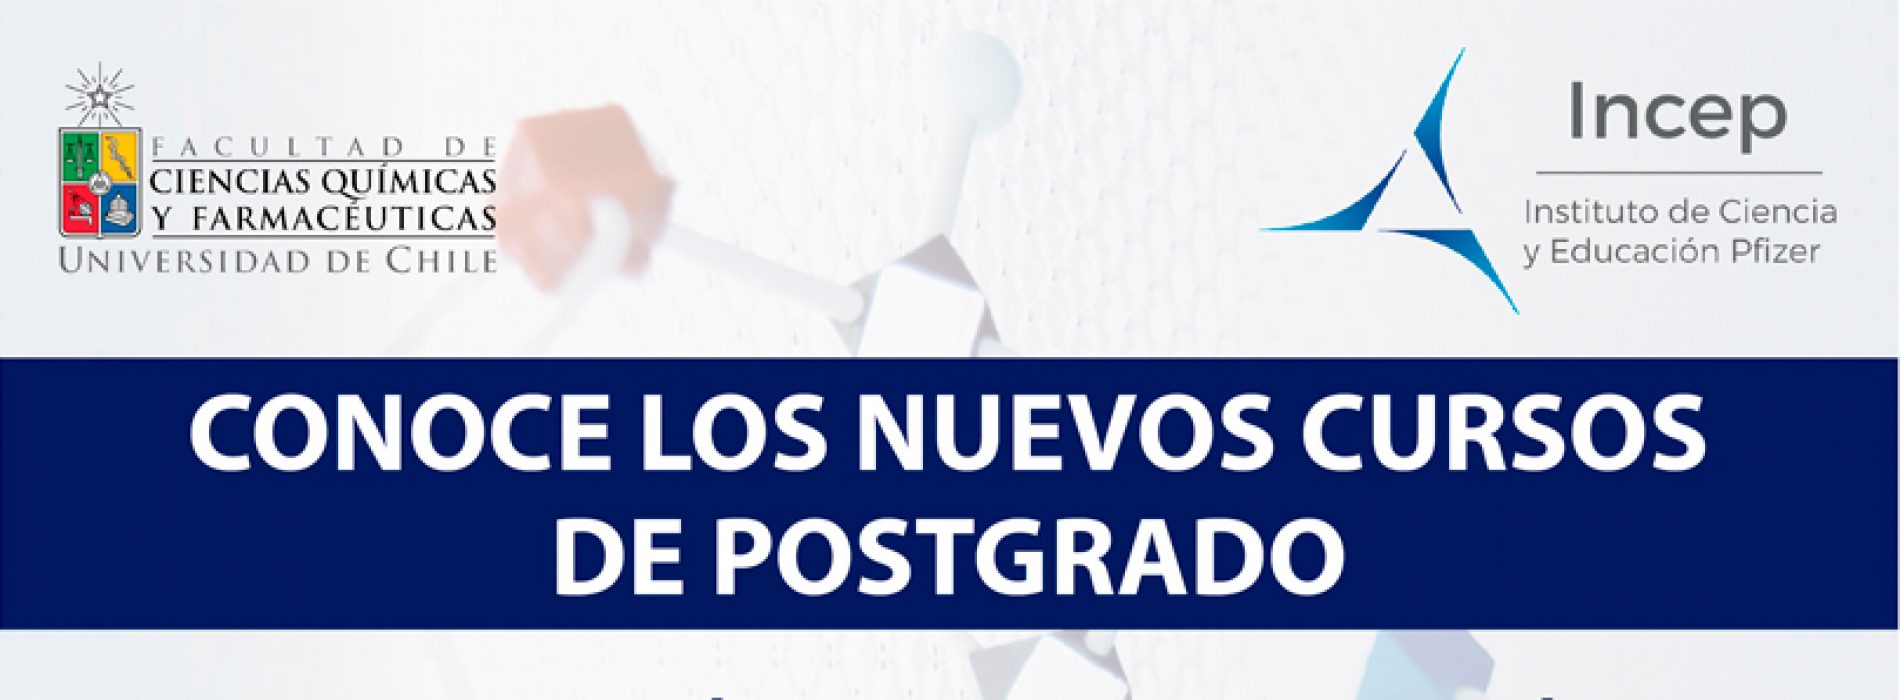 Meet the new postgraduate courses: Pharmacoeconomics / bioequivalence / pharmacovigilance / regulatory affairs